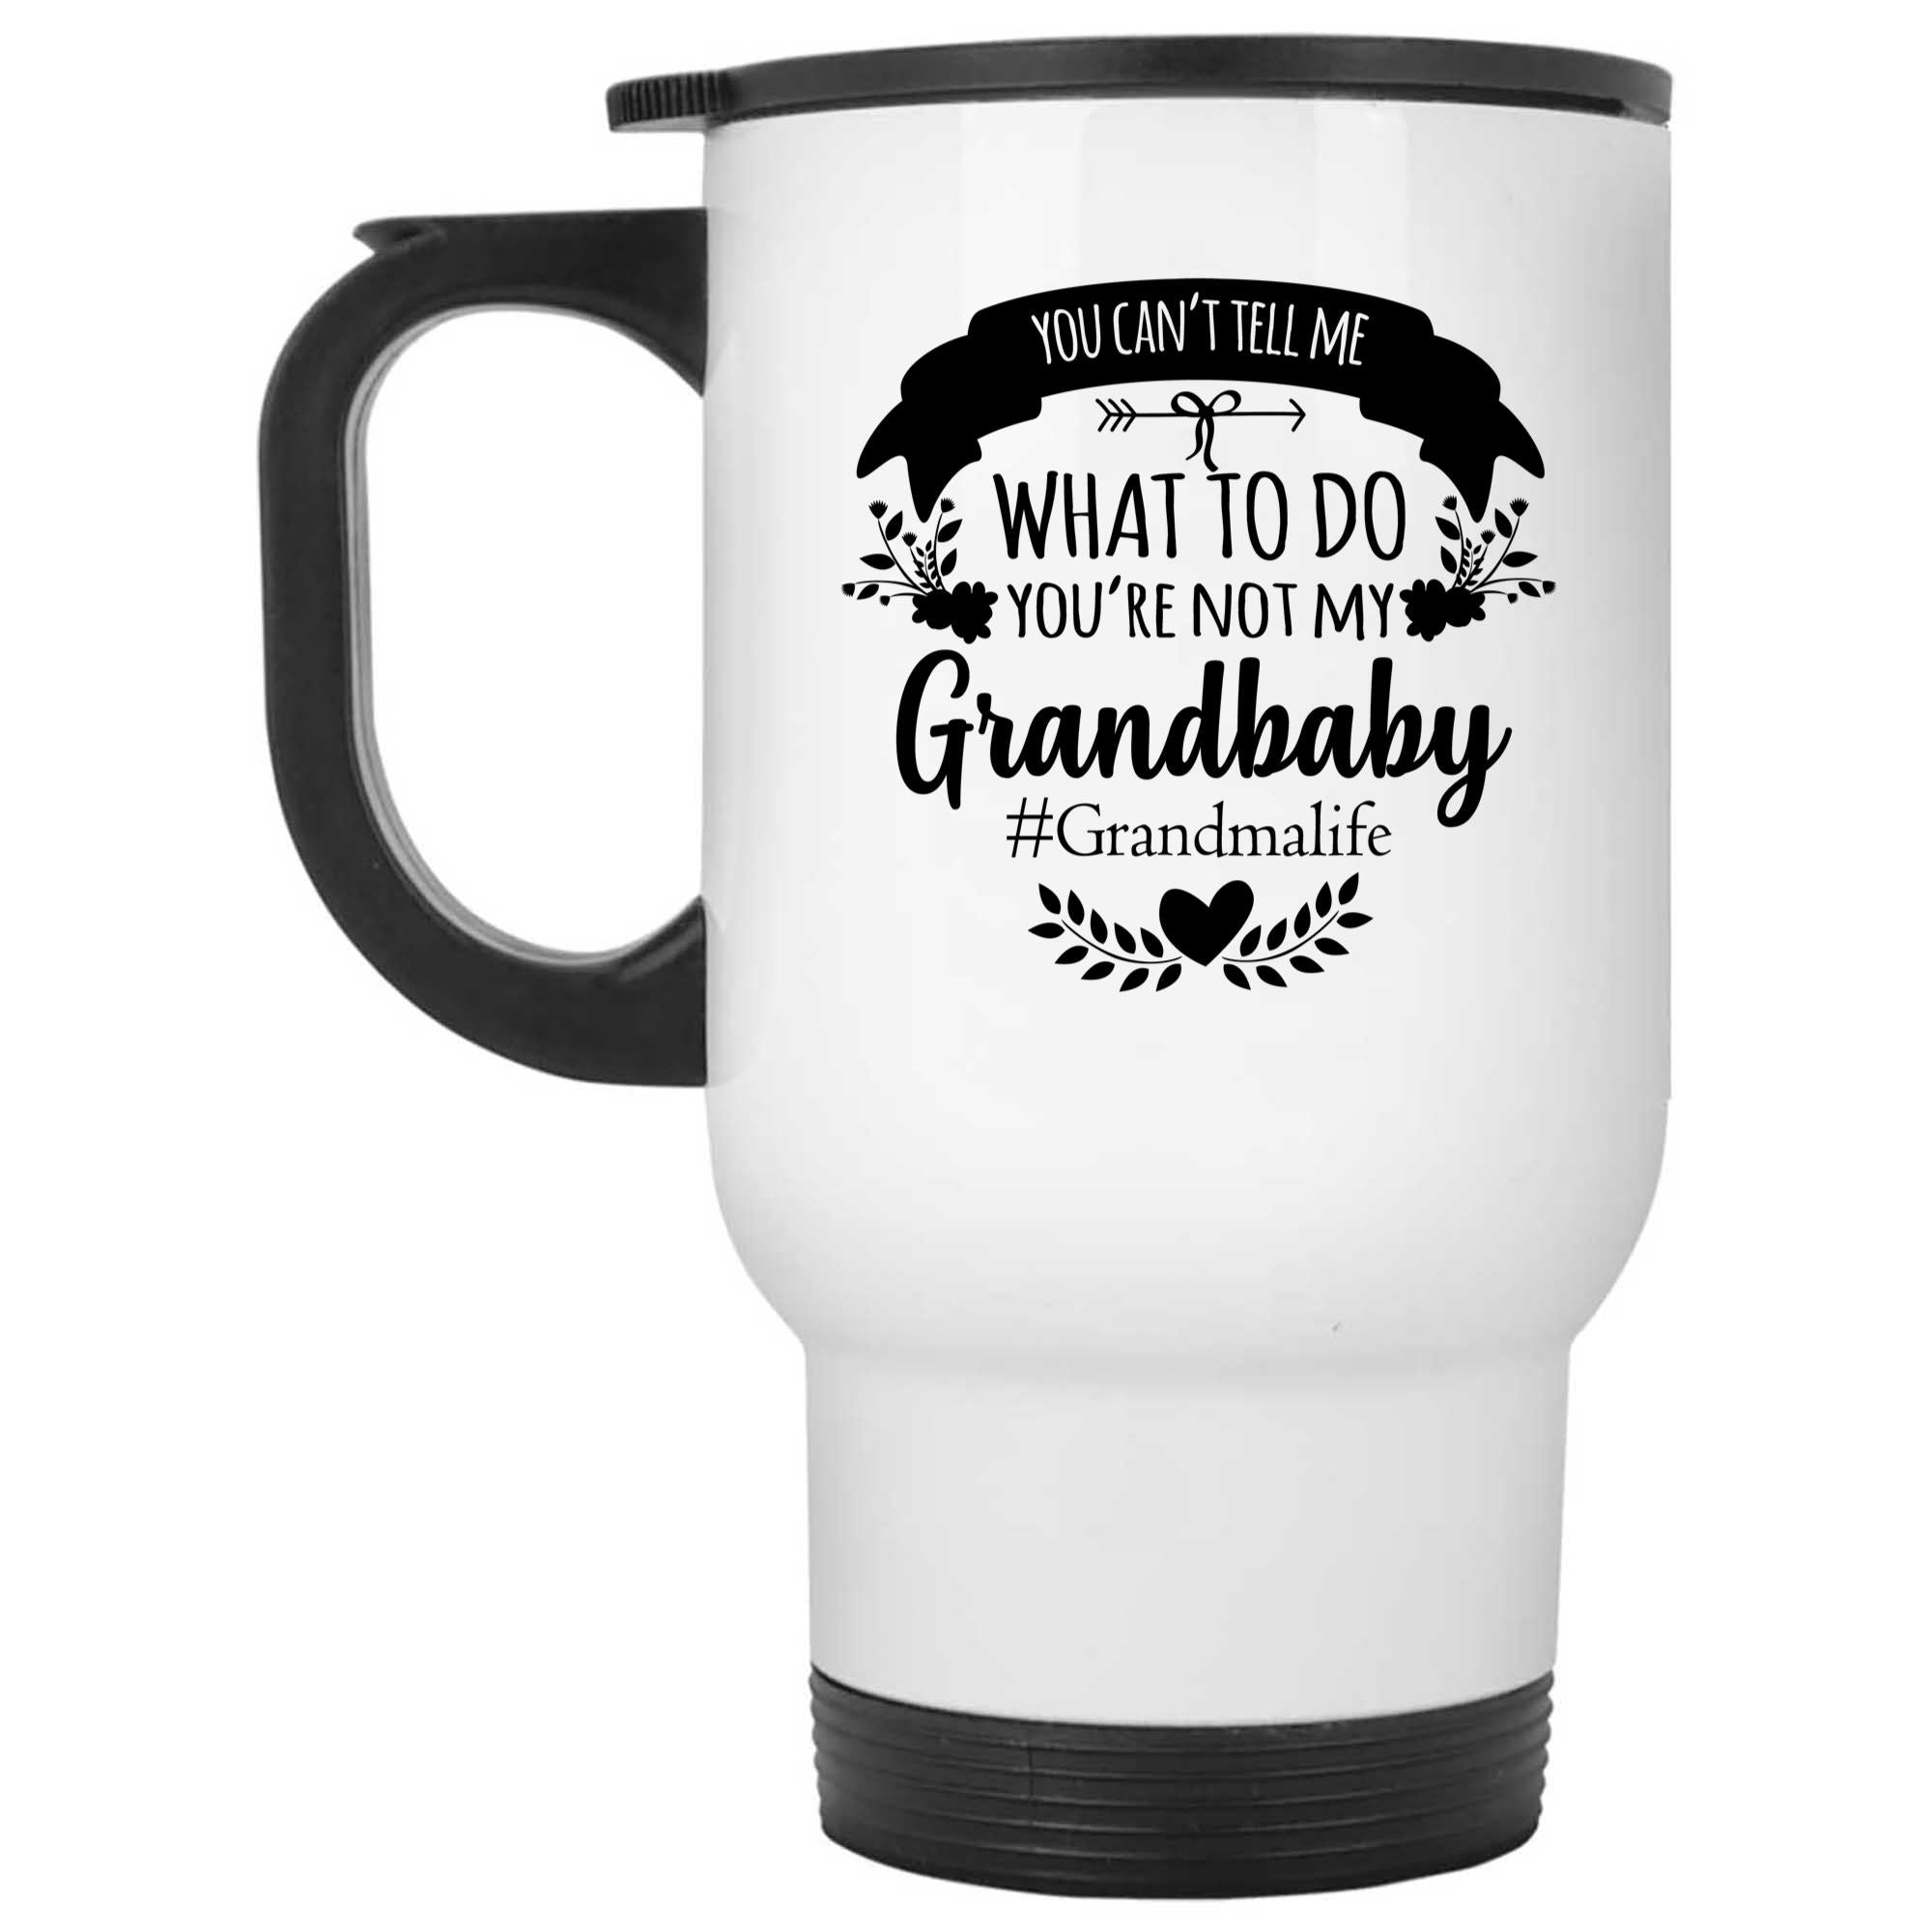 Skitongifts Funny Ceramic Novelty Coffee Mug You Can't Tell Me What To Do You're Not My Grandbaby Grandma bOZvNJR